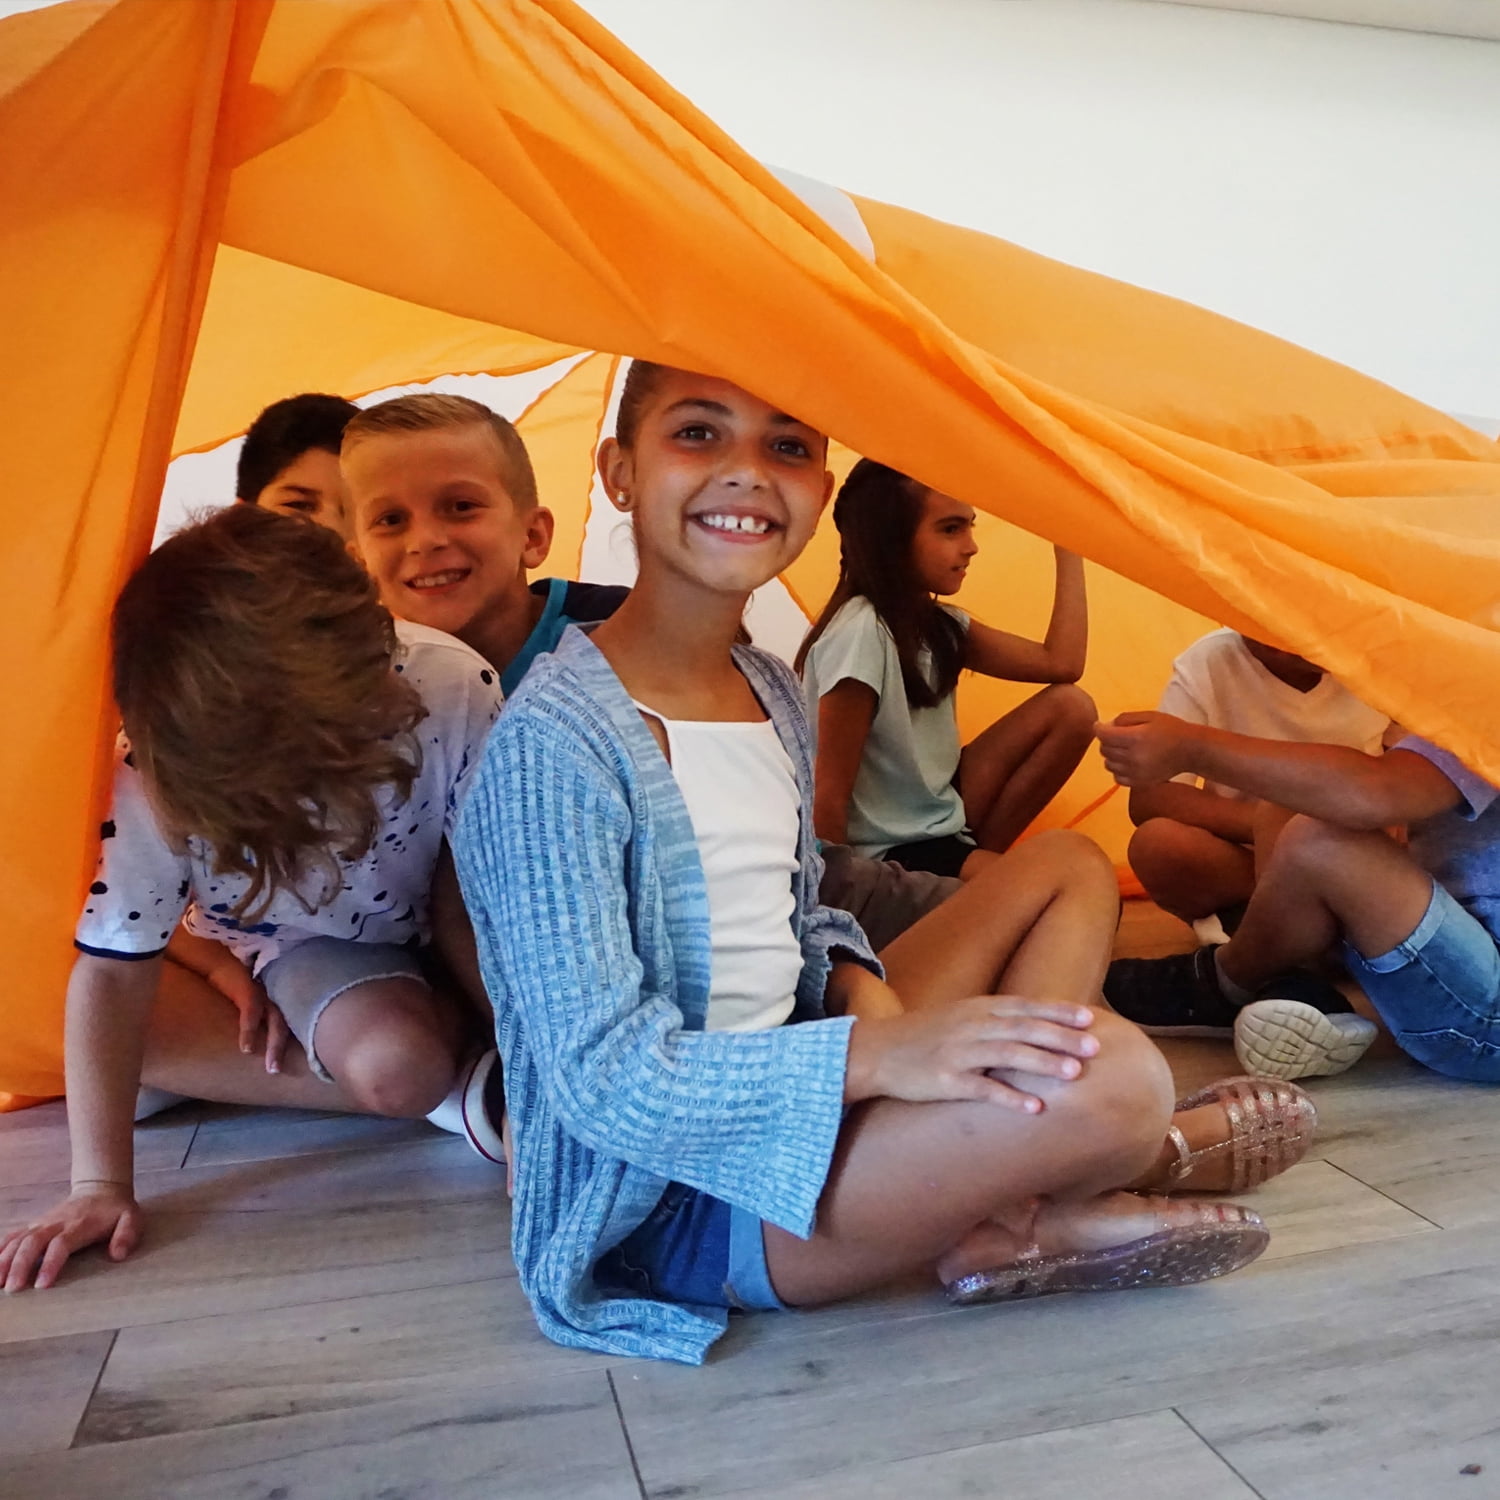 Original Airfort Build a Fort in 30 Seconds Pink Color Inflate Kids Indoor for sale online 